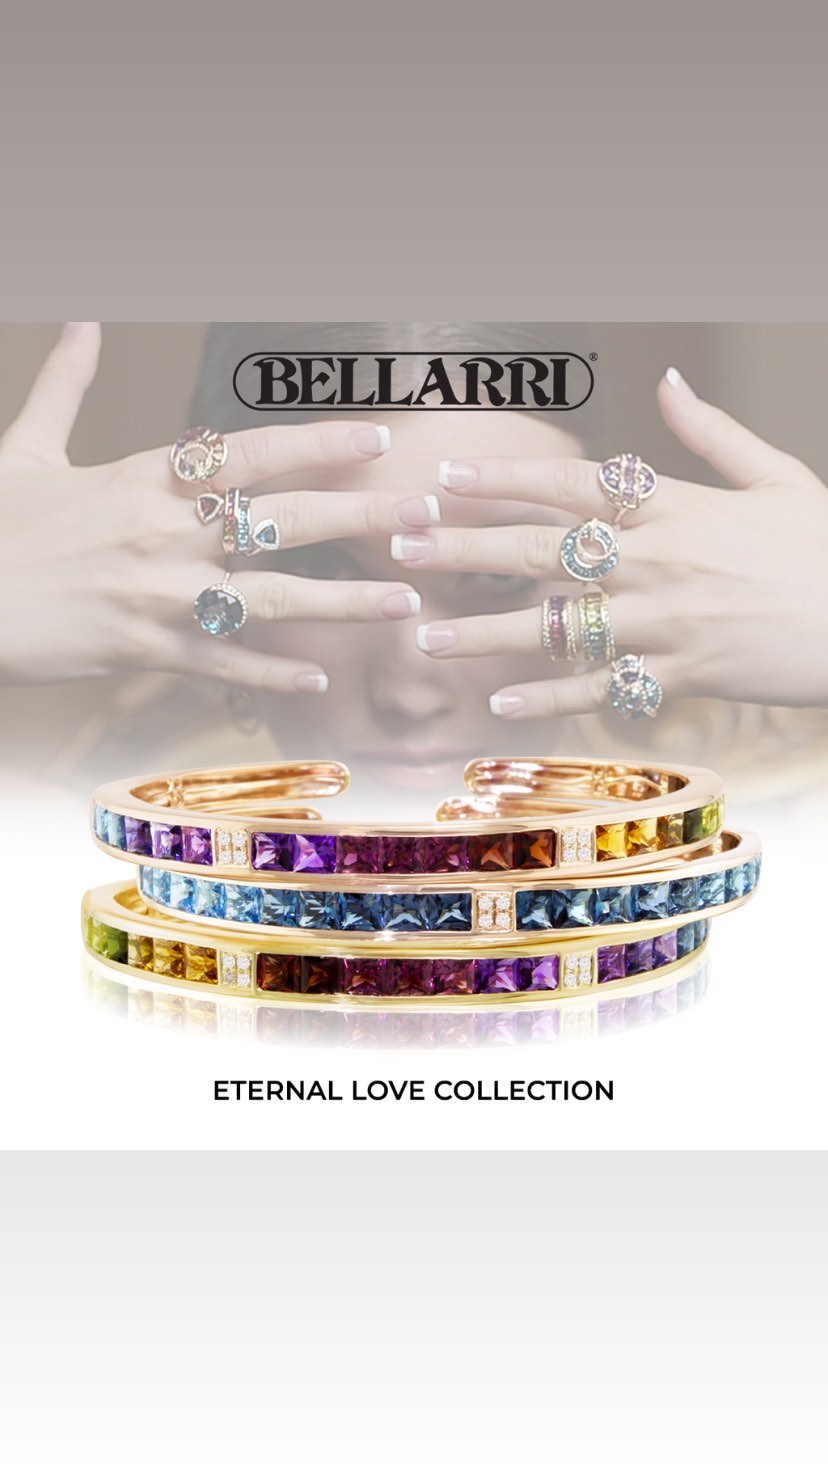 BARONS Jewelers Announces Bellarri Fine Jewelry Event for Saturday,  November 11th | PressRelease.com